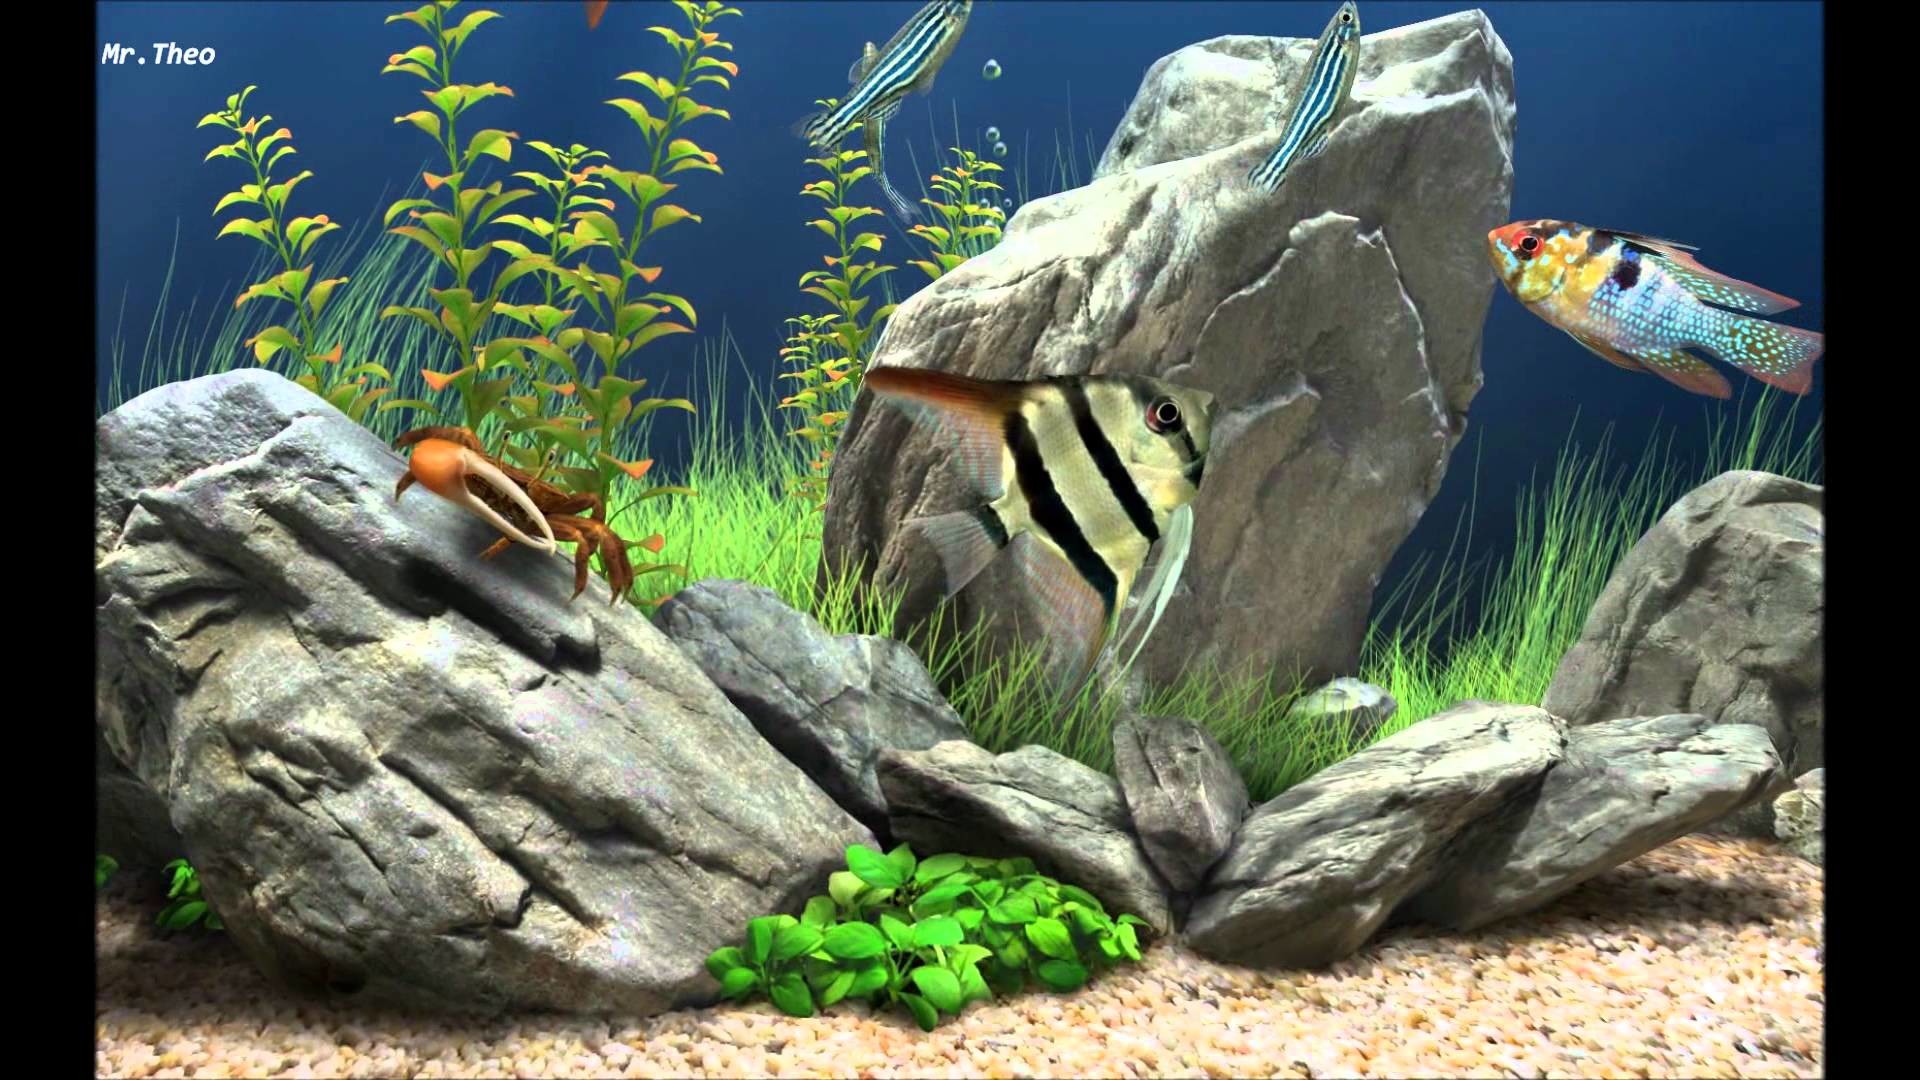 1920x1080 Full Size of Fish Tank Fish Tank Screensaver Windows Marine Aquarium Live  Free Downloadfish Mac Screensavers ...